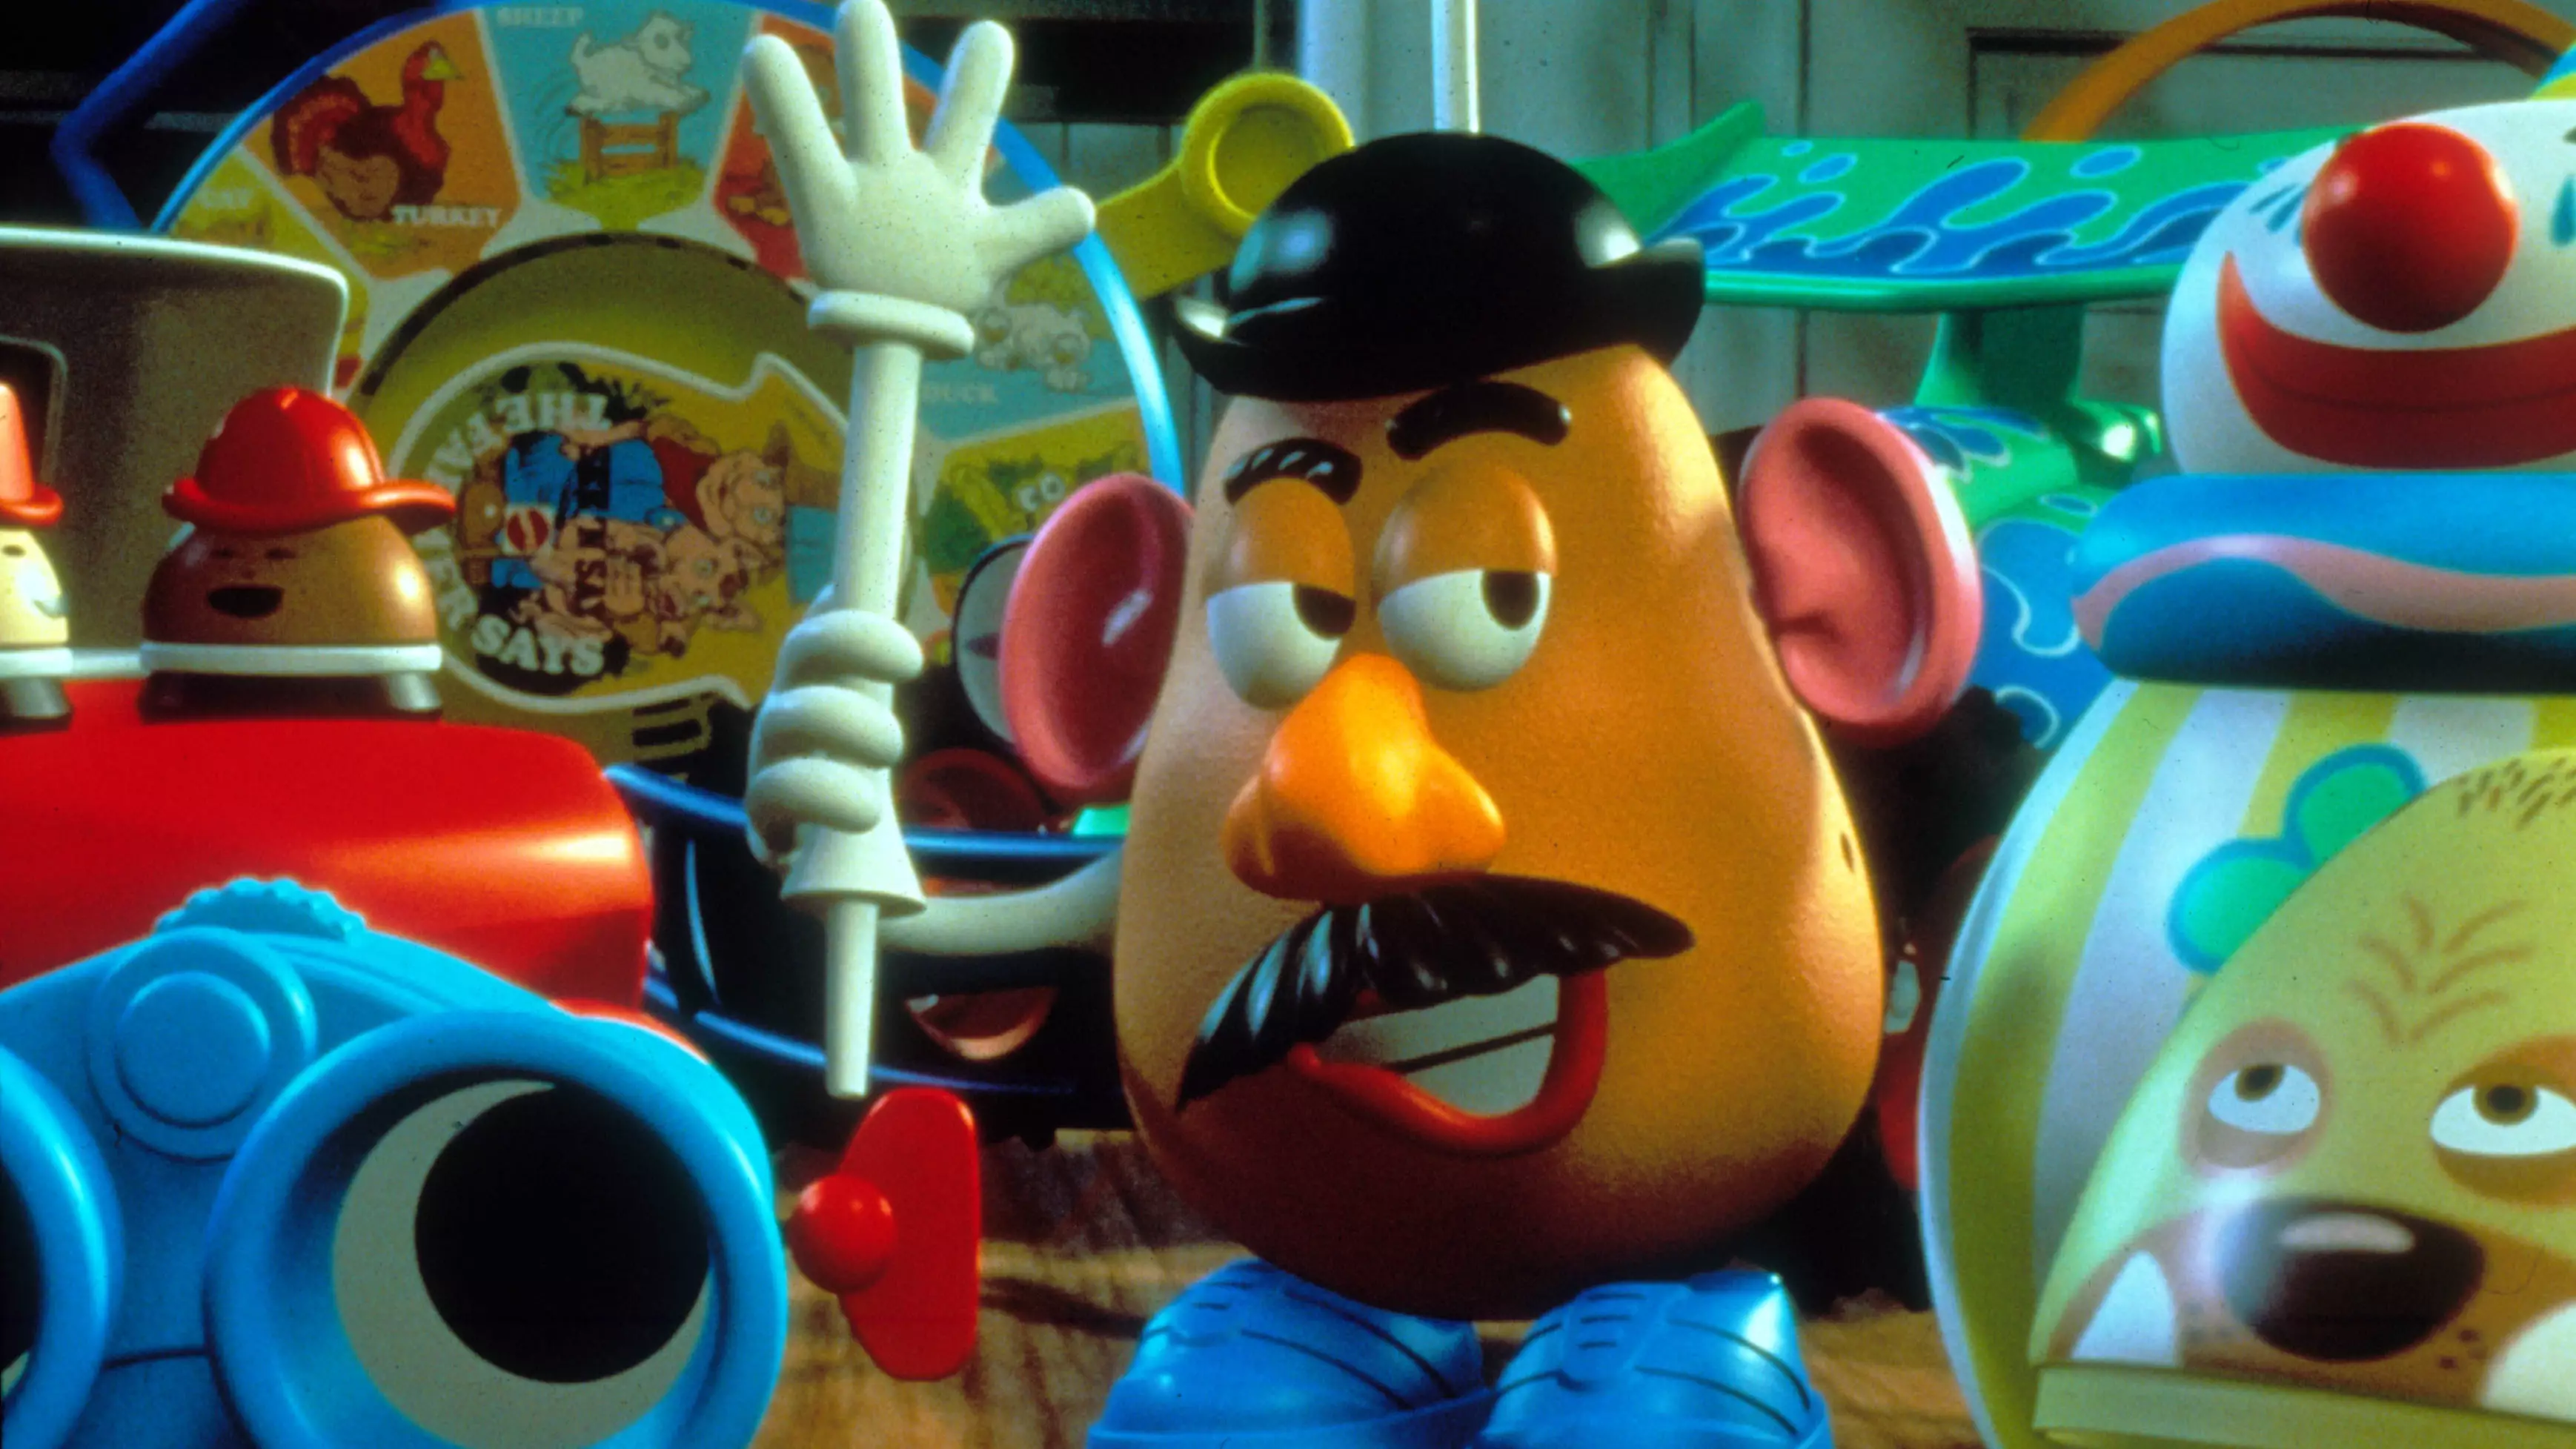 Mr Potato Head Loses "Mr" Title In Gender-Neutral Rebrand